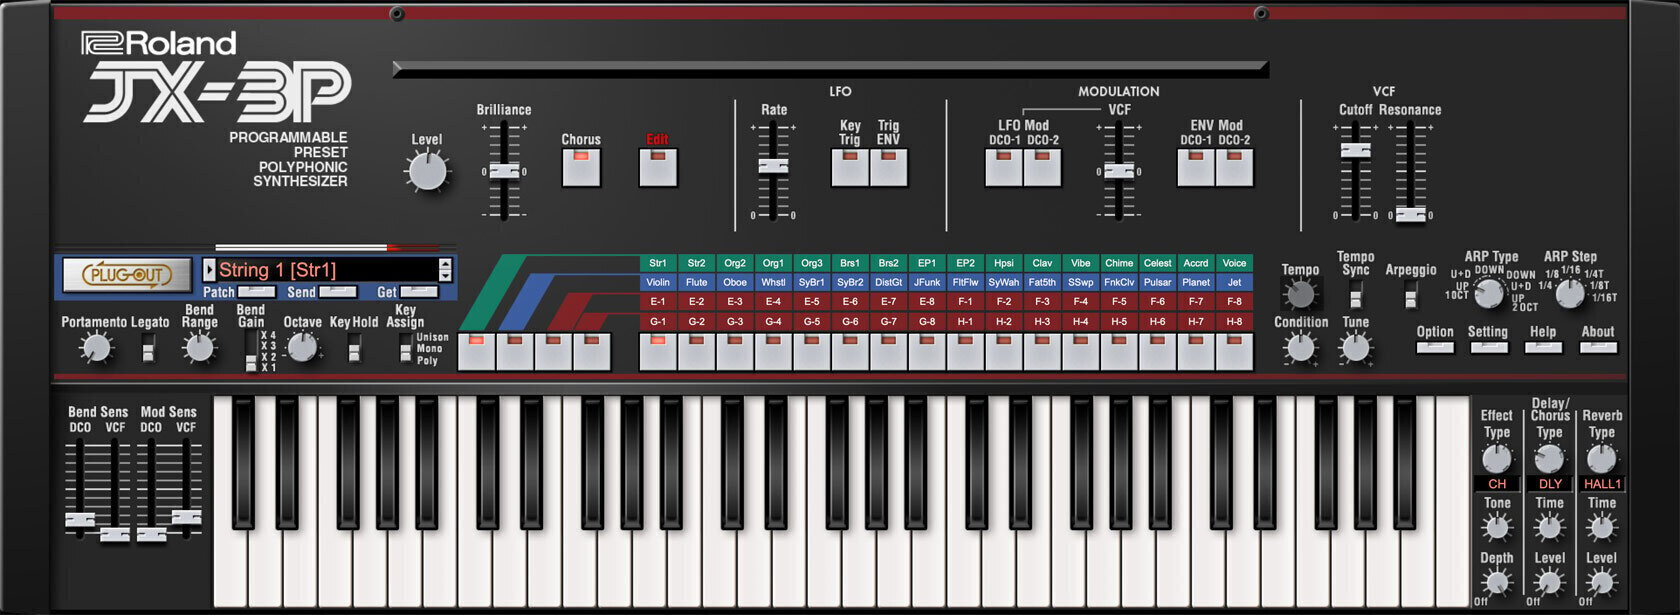 Instrument VST Roland JX-3P Key (Produkt cyfrowy)